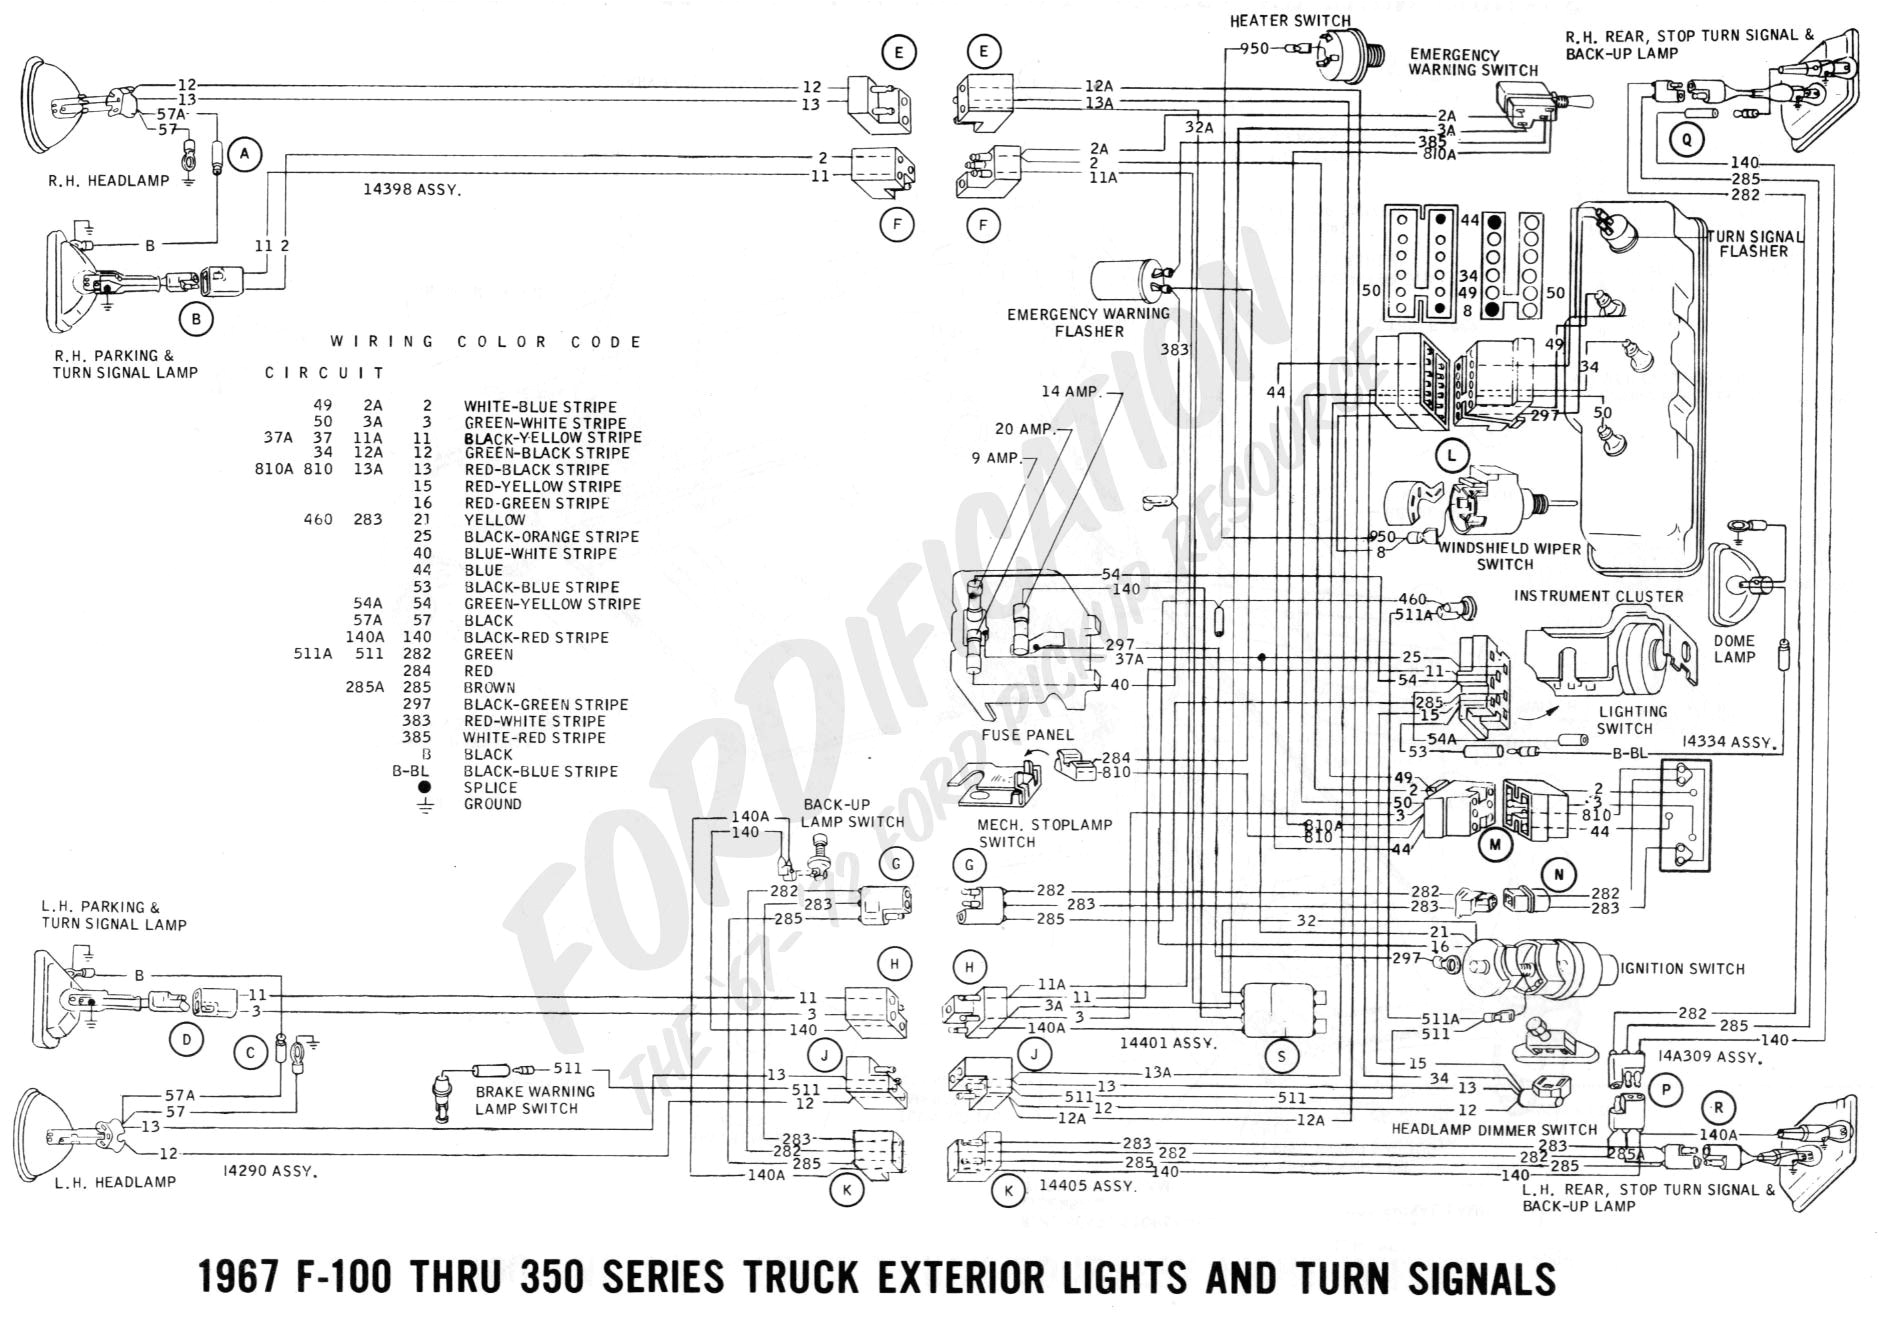 1951 mercury turn signal wiring diagram schematic circuit diagram turn signal wiring diagram 1950 merc